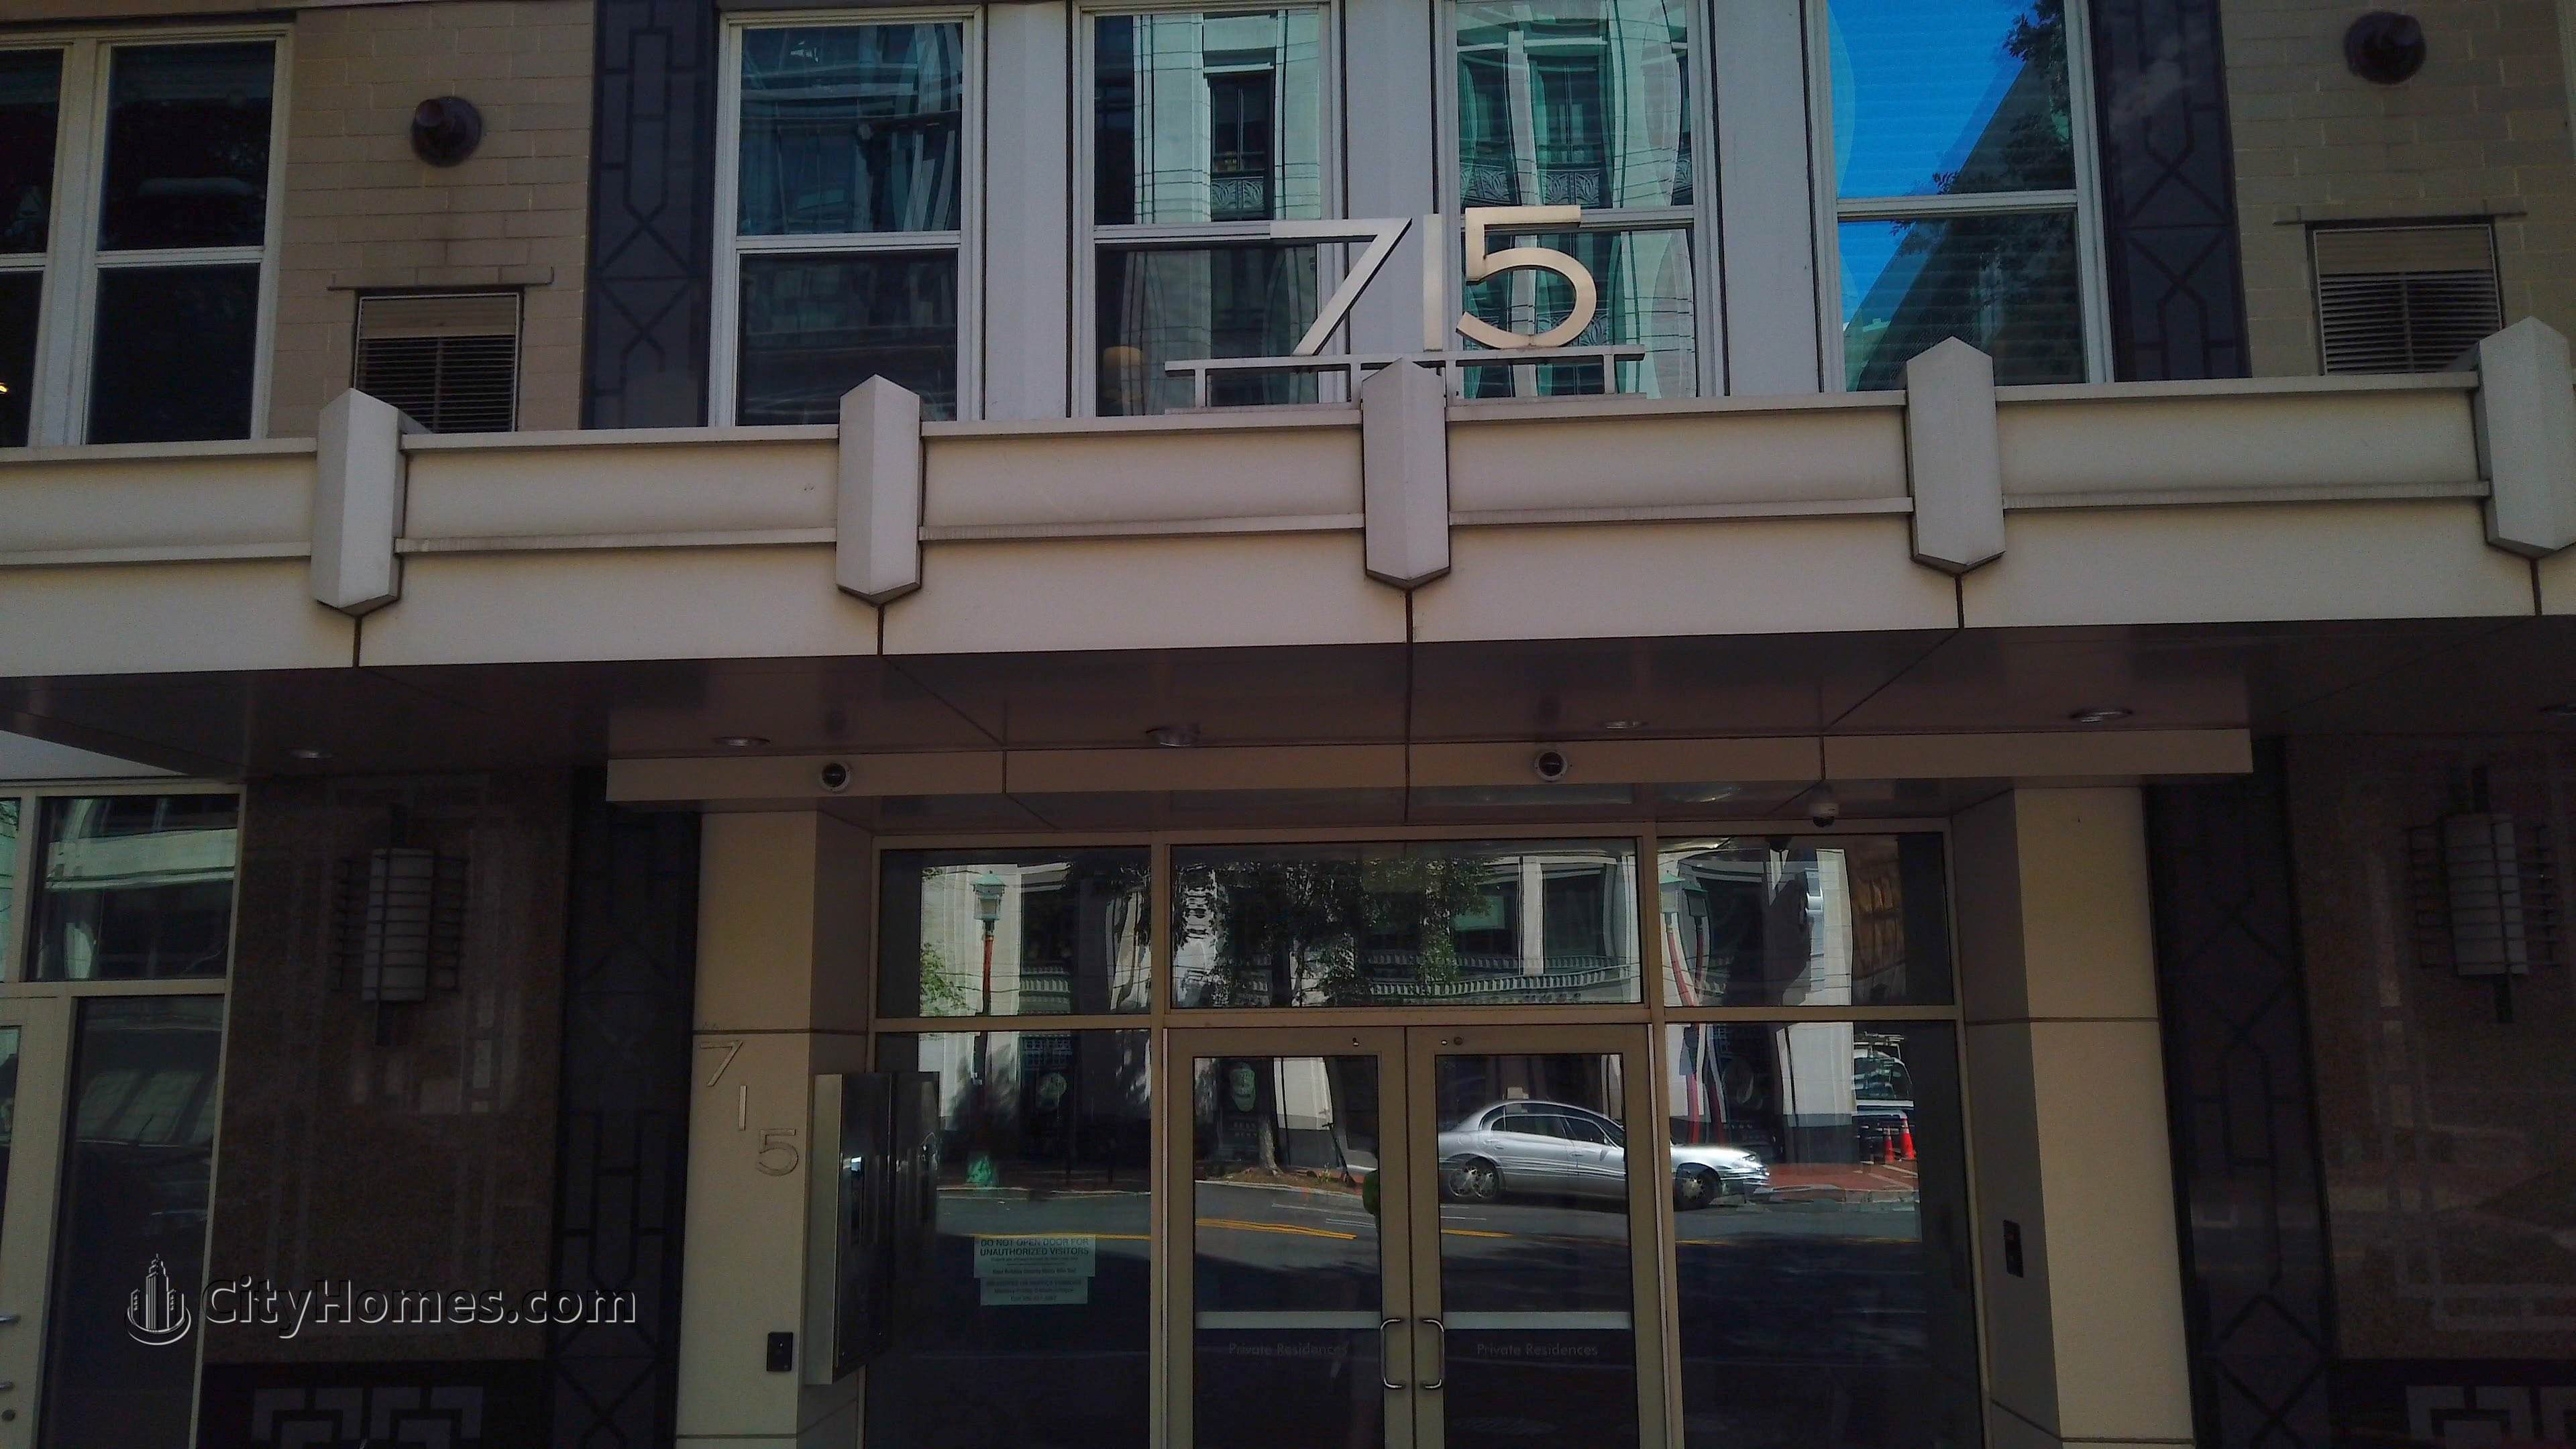 The Cosmopolitan byggnad vid 715 6th St NW, Chinatown, Washington, DC 20001